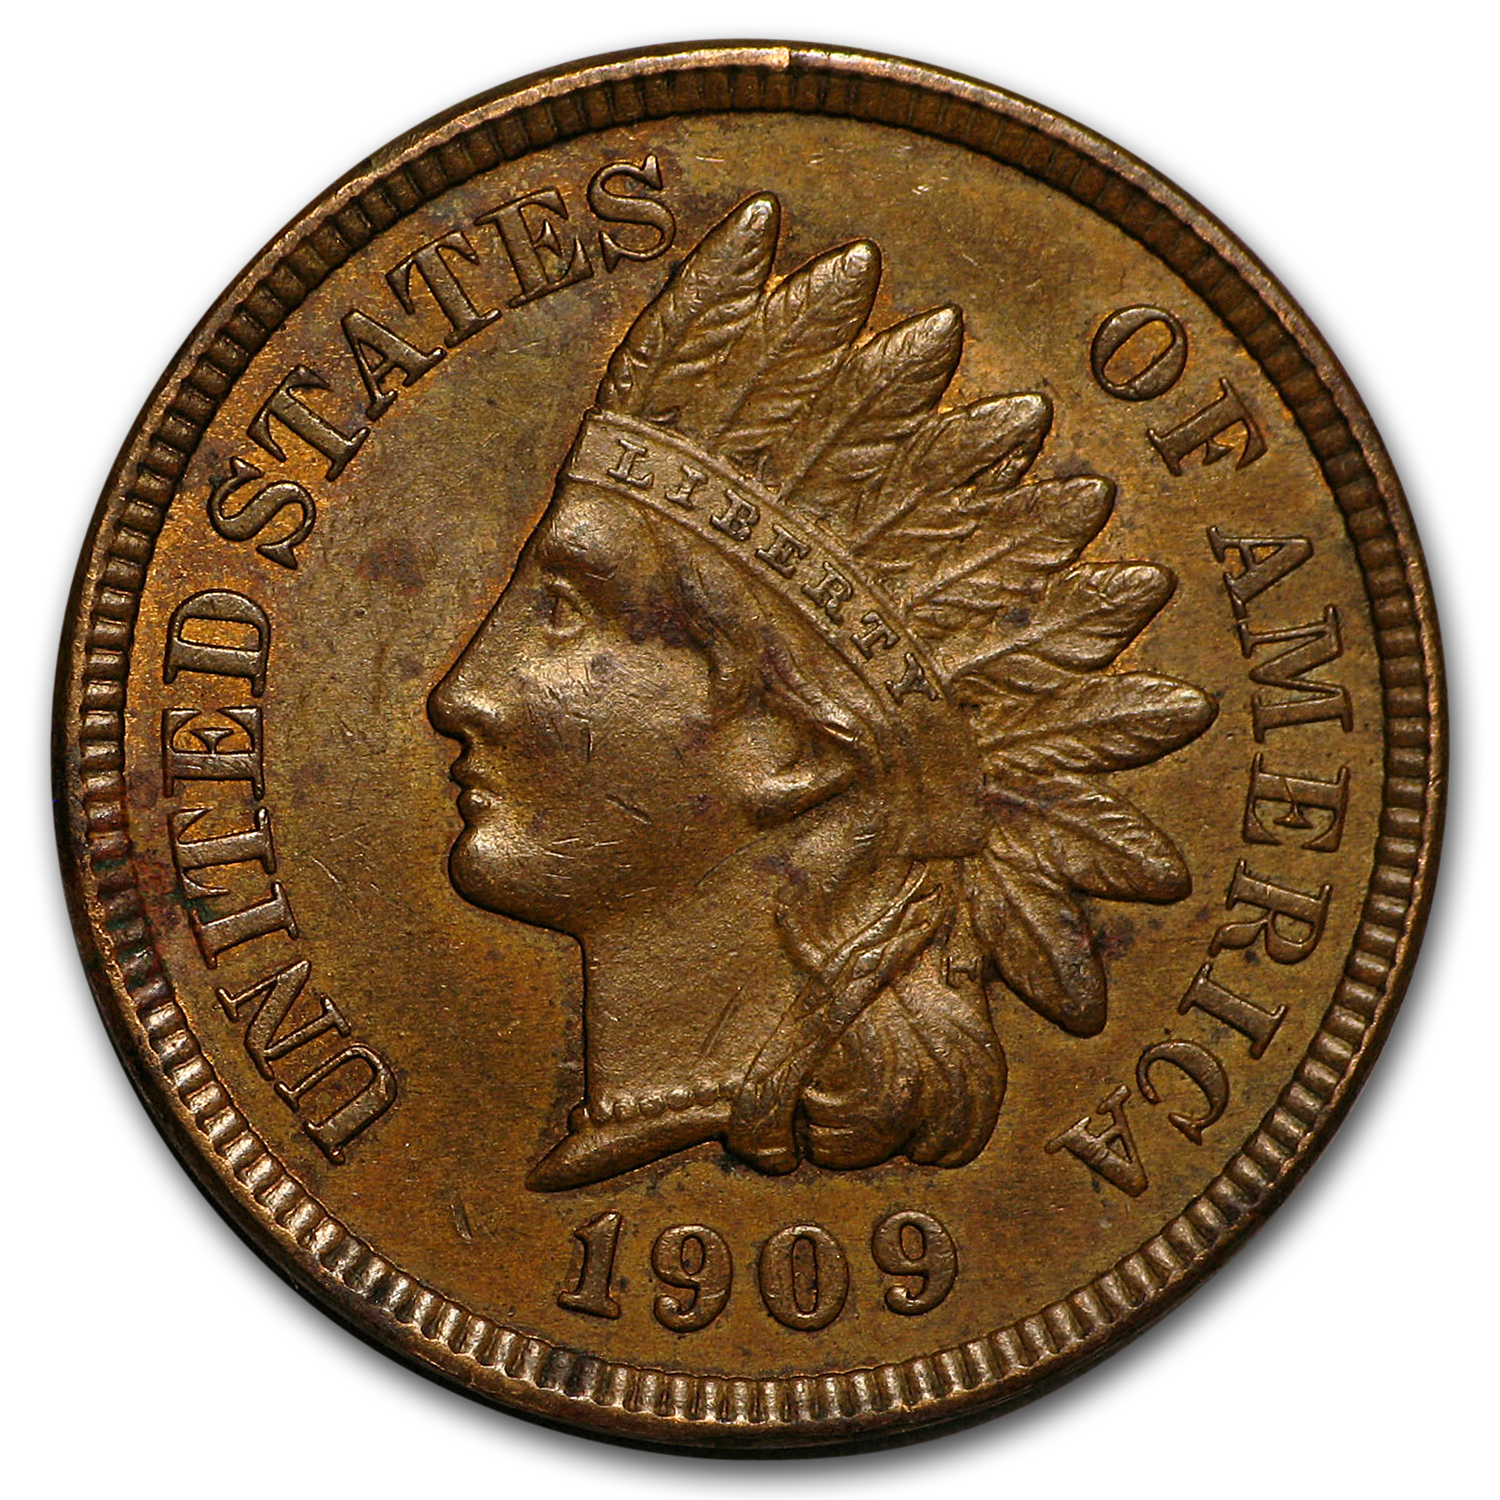 Buy 1909 Indian Head Cent BU